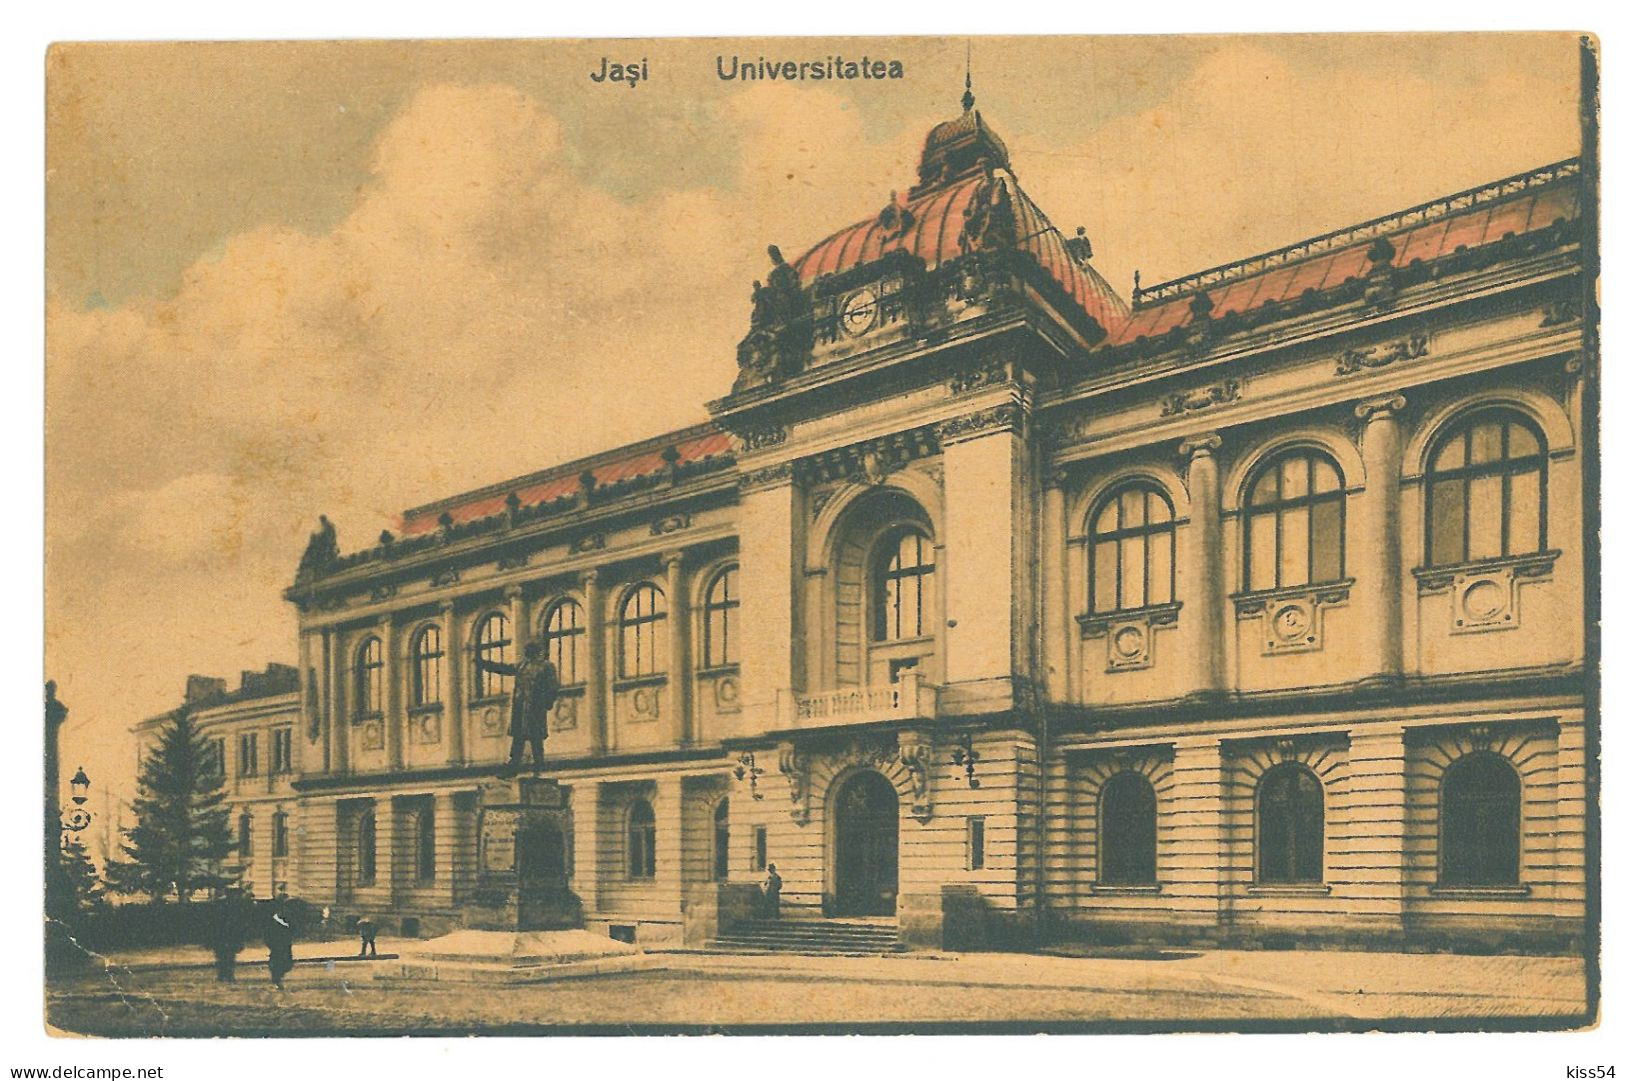 RO - 25238 IASI, University, Romania - Old Postcard - Unused - Roumanie